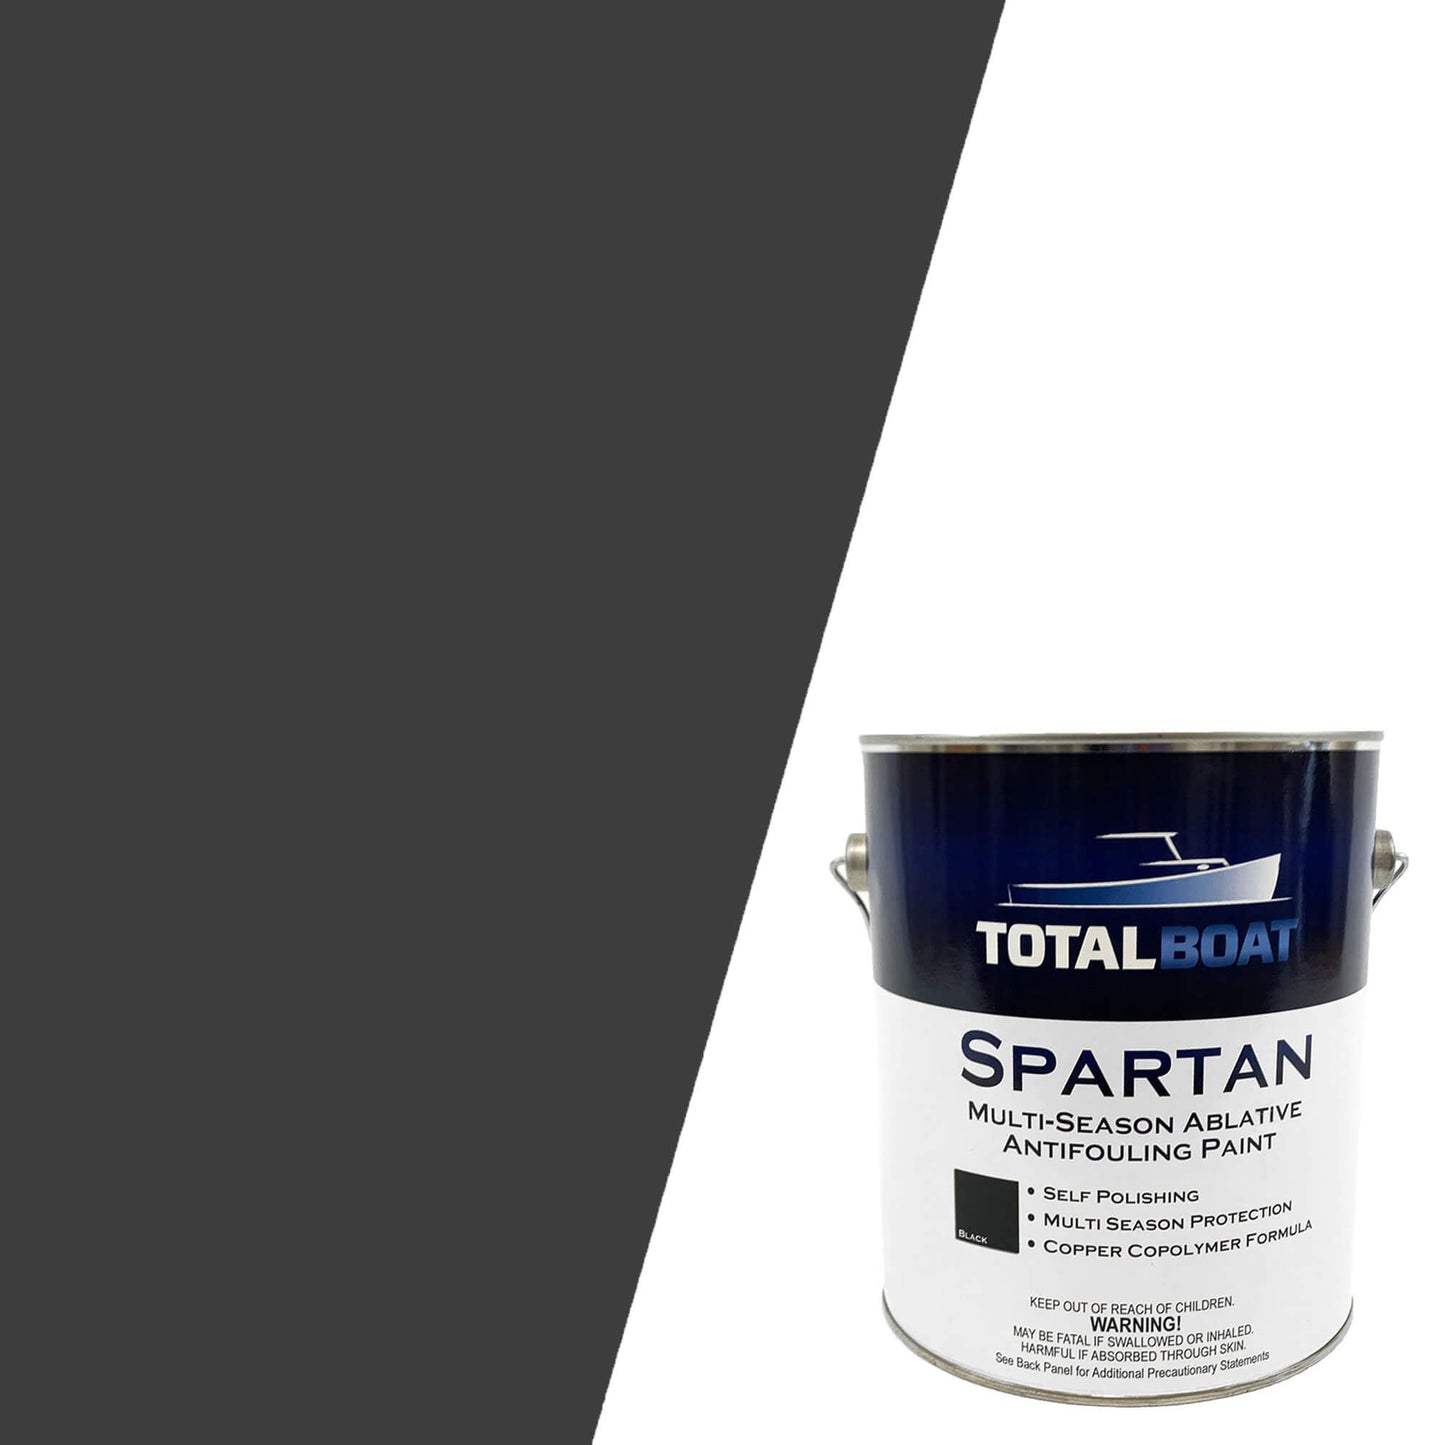 TotalBoat Spartan Multi-Season Antifouling Paint Black